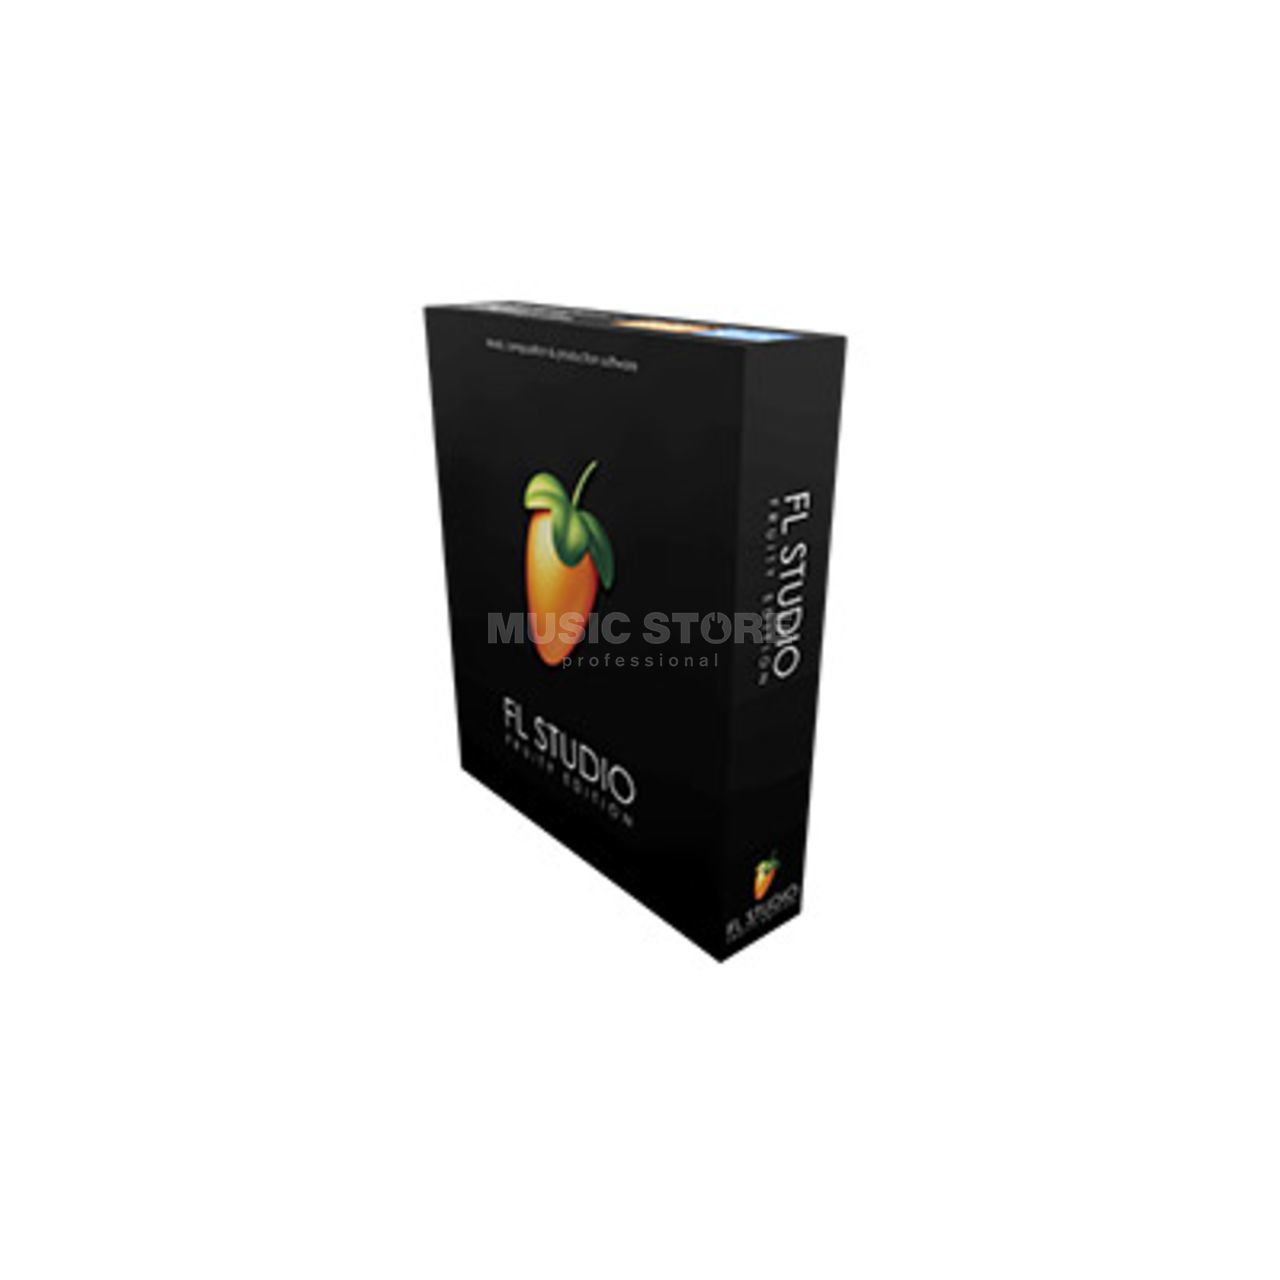 fruity loops Download FL Studio 10 for Free via Mediafire